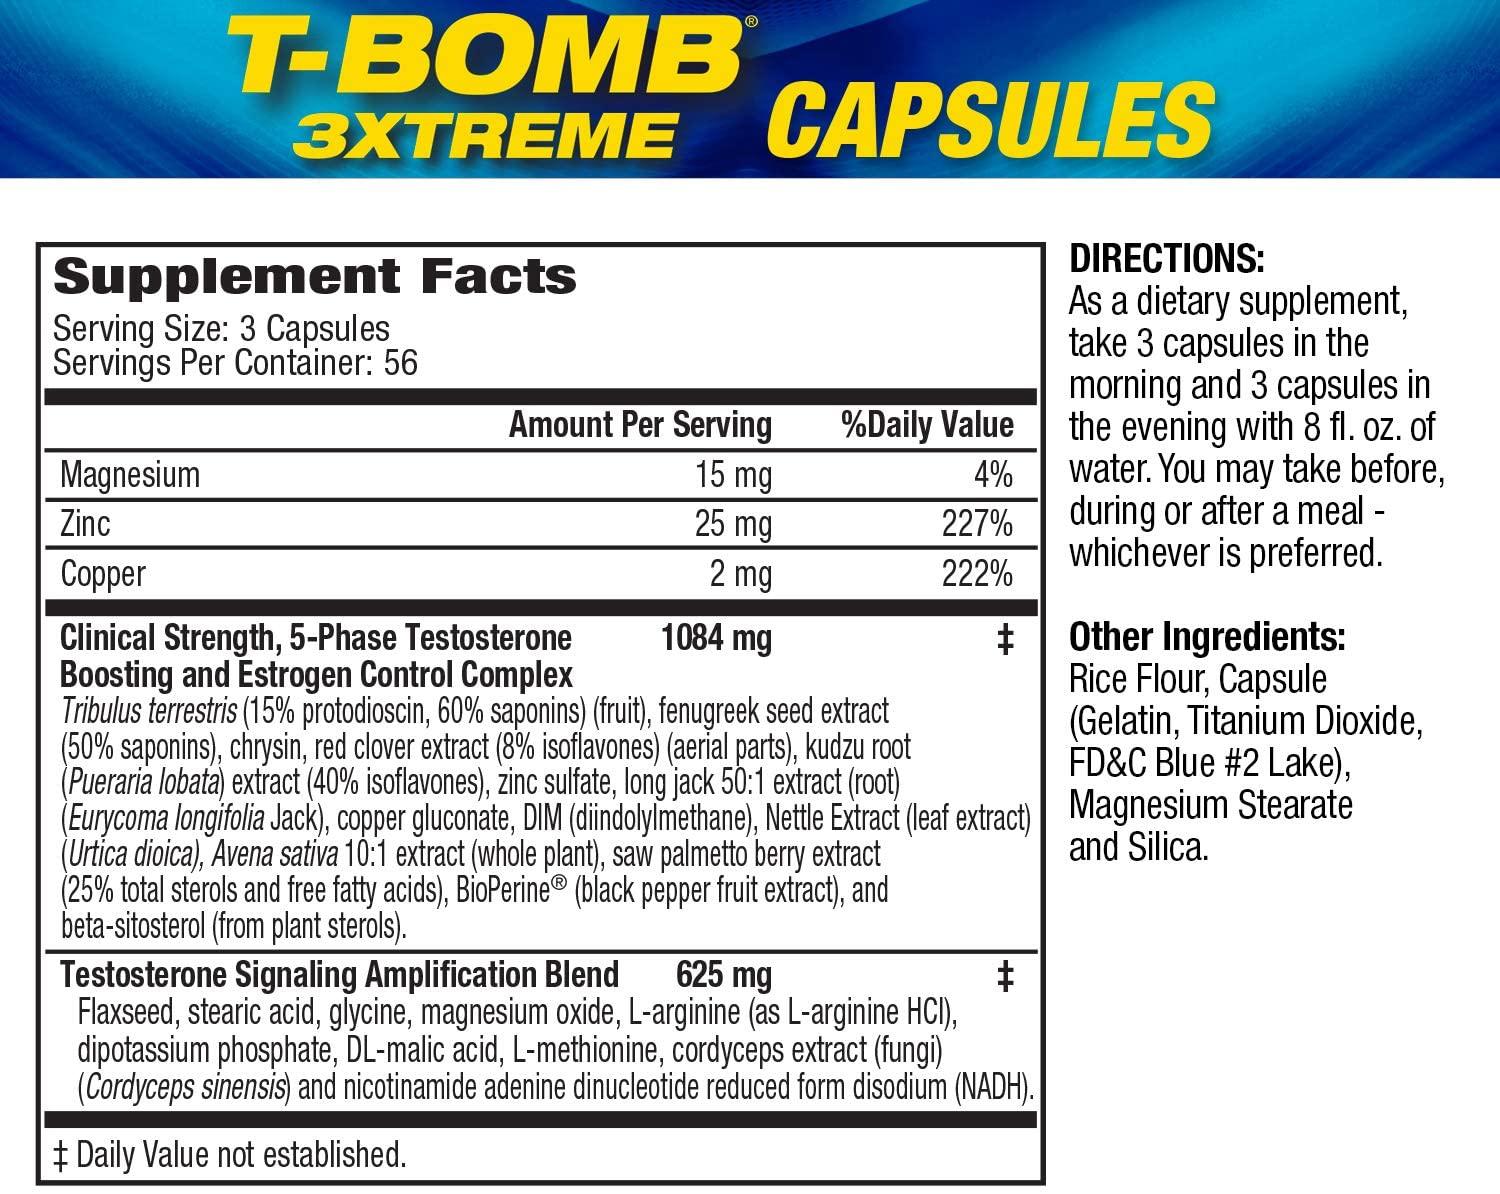 MHP - T-Bomb 3Xtreme Testosterona Formula 168 Capsulas - NutriVita